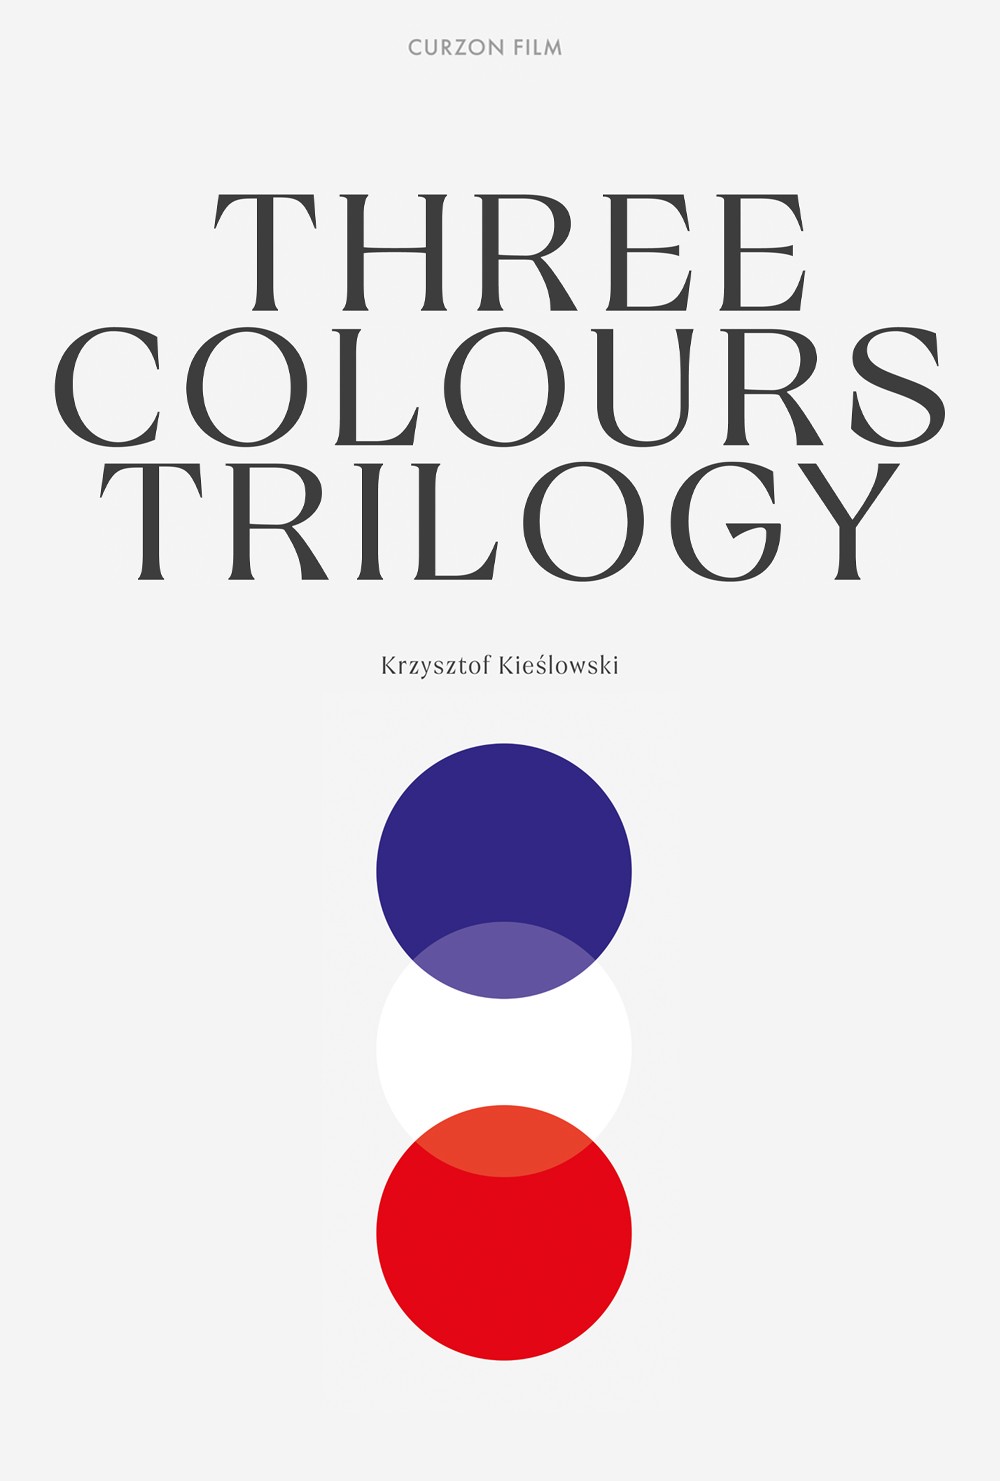 THREE COLOURS TRILOGY